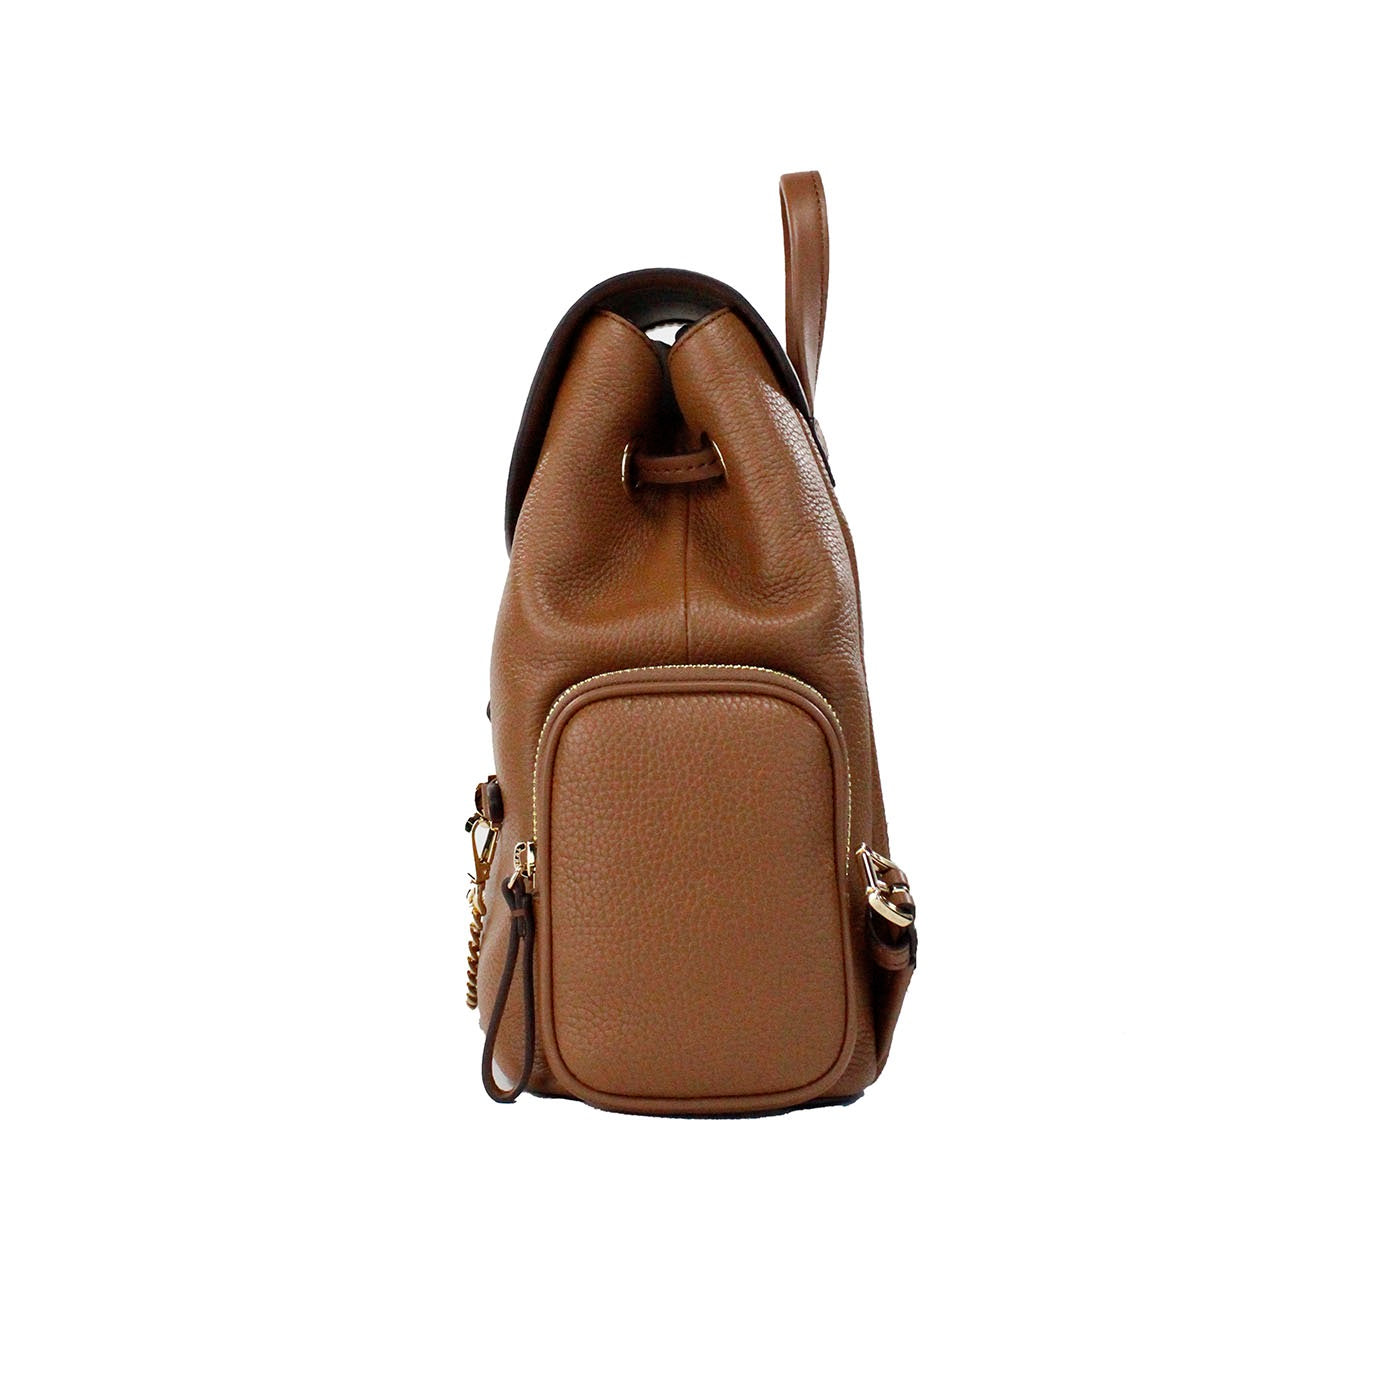 Fashionsarah.com Fashionsarah.com Michael Kors Jet Set Medium Luggage Leather Chain Shoulder Backpack Bag